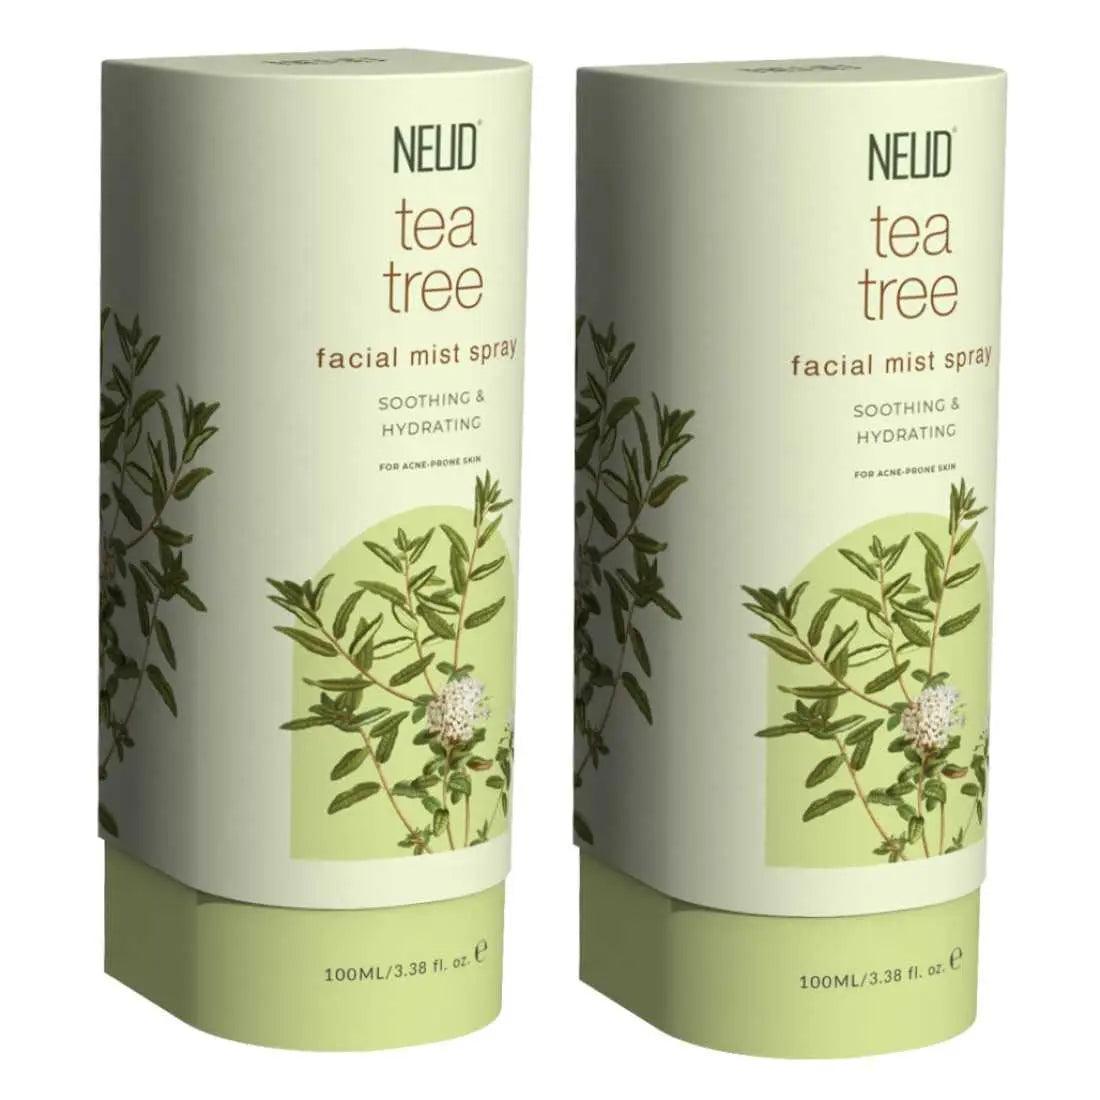 NEUD Tea Tree Facial Mist Spray For Acne-Prone Skin - 100 ml 9559682313584